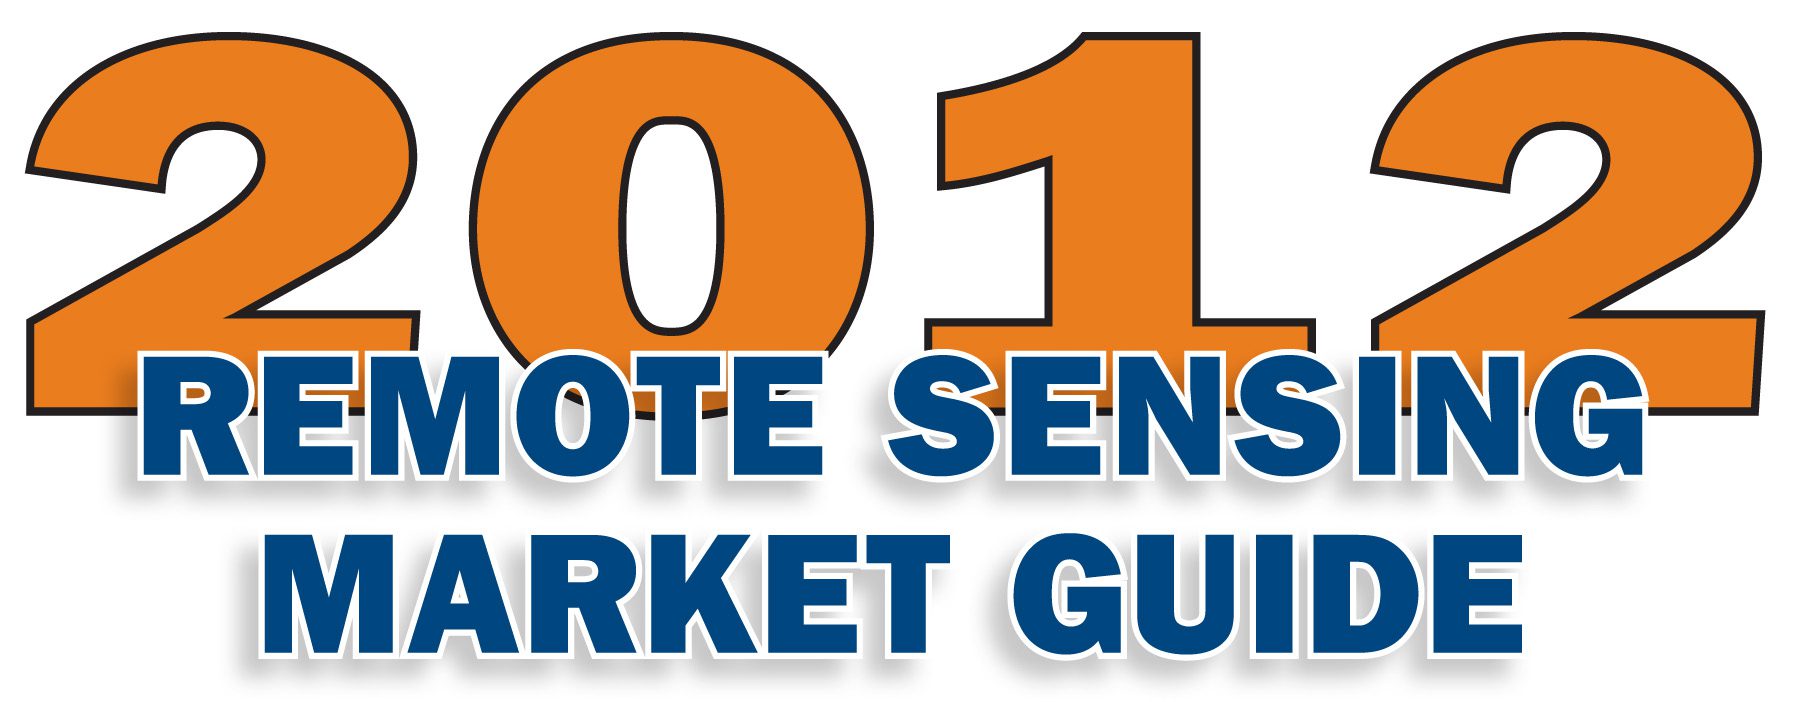 2012 Remote Sensing Market Guide